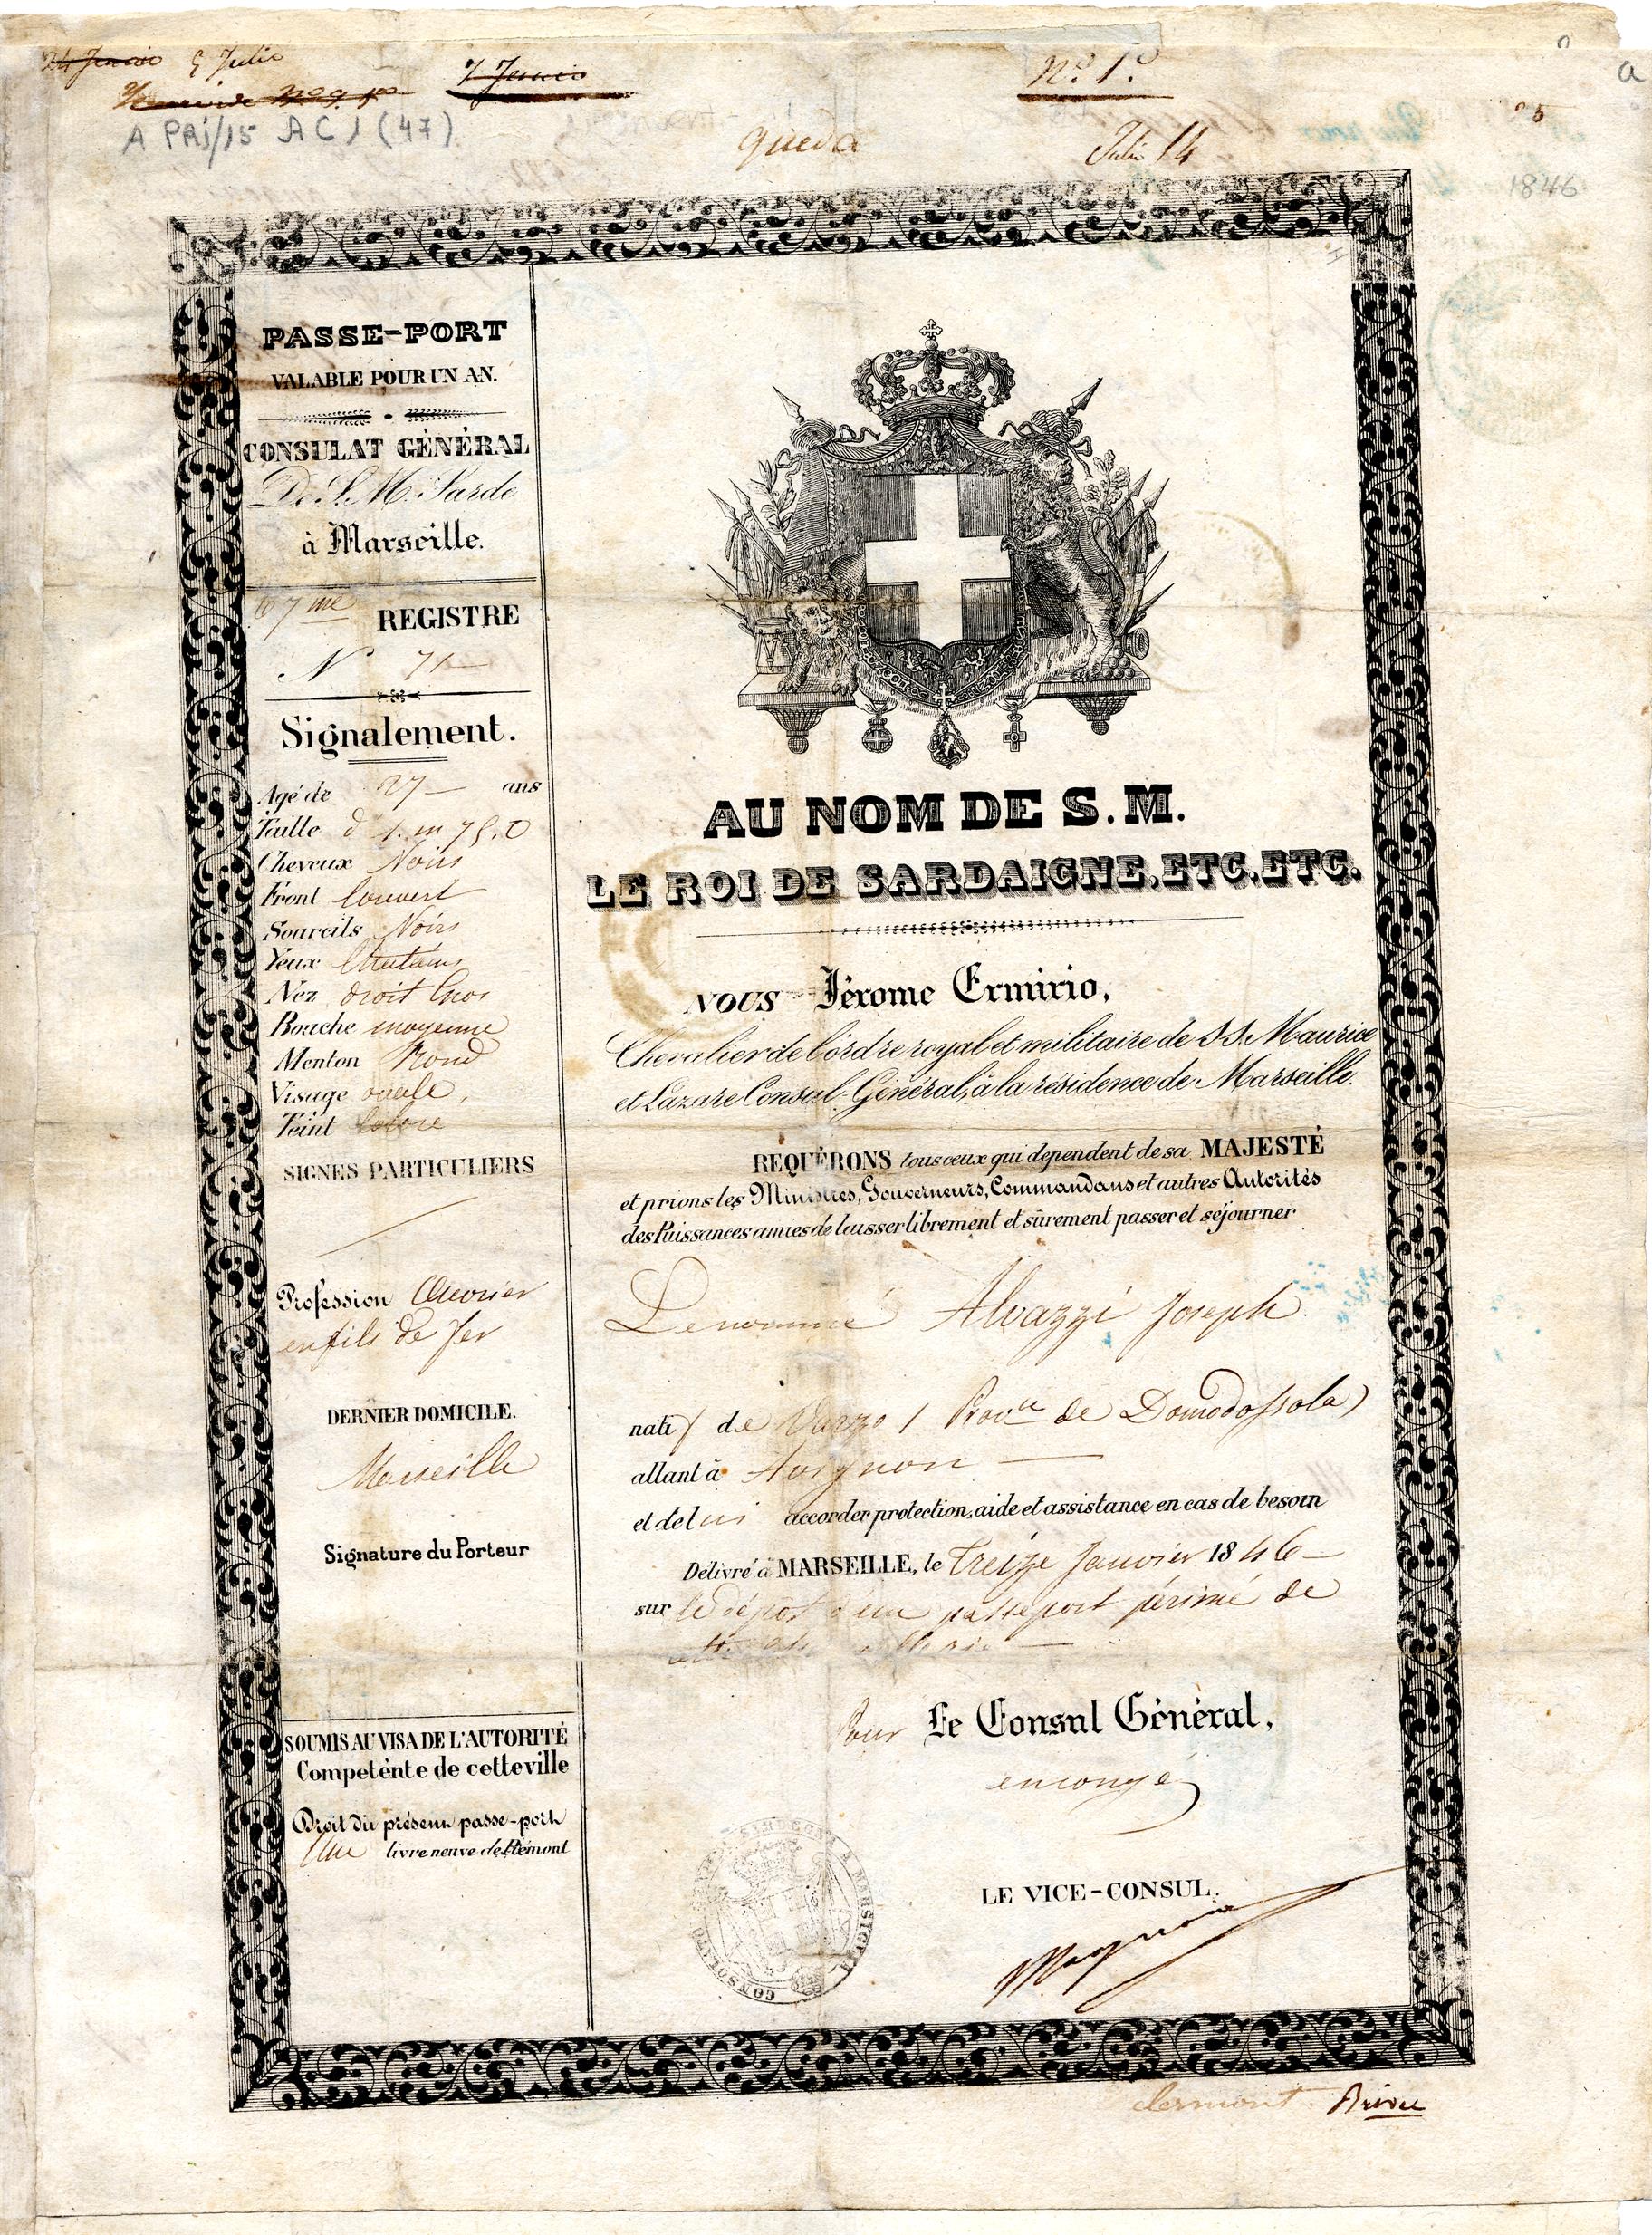 Passaporte de Joseph Alvazzi